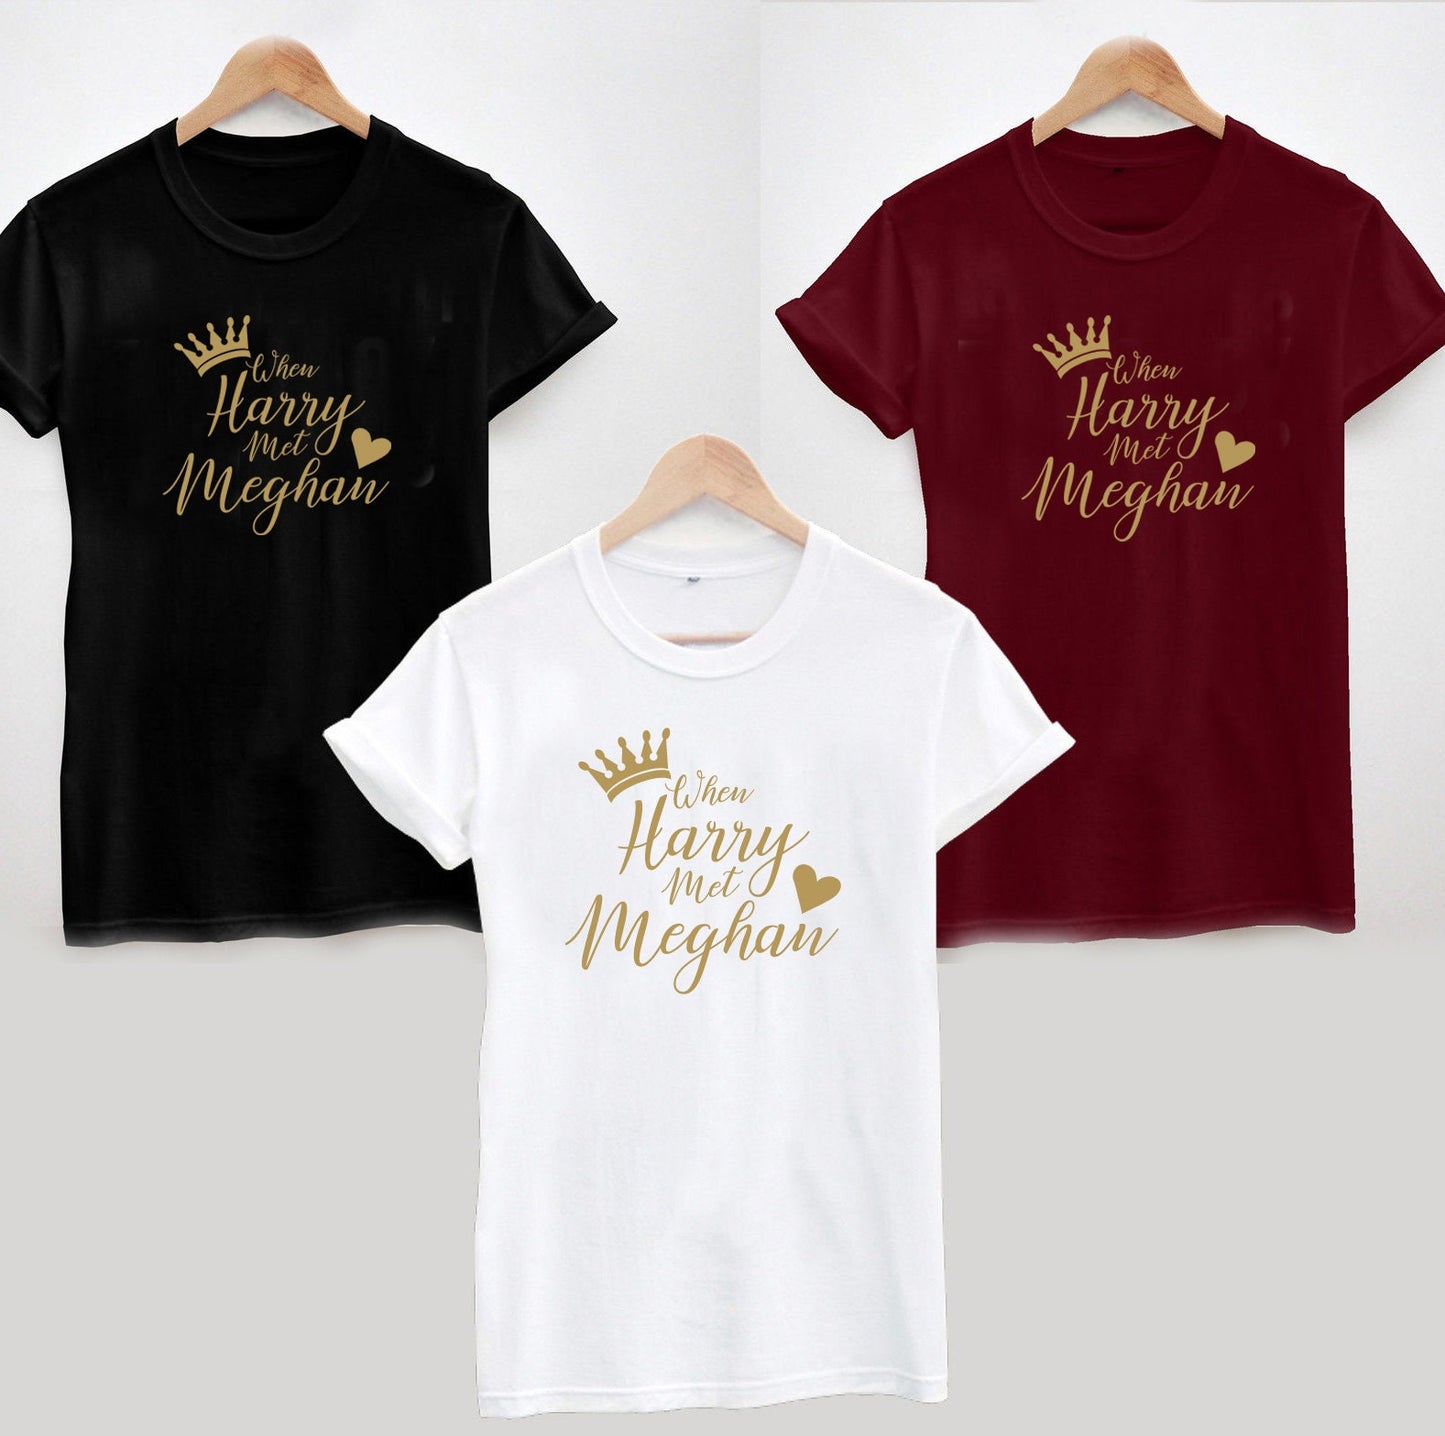 When Harry Met Meghan T-Shirt - Fun Harry & Meghan Royal Wedding 2018 Gift